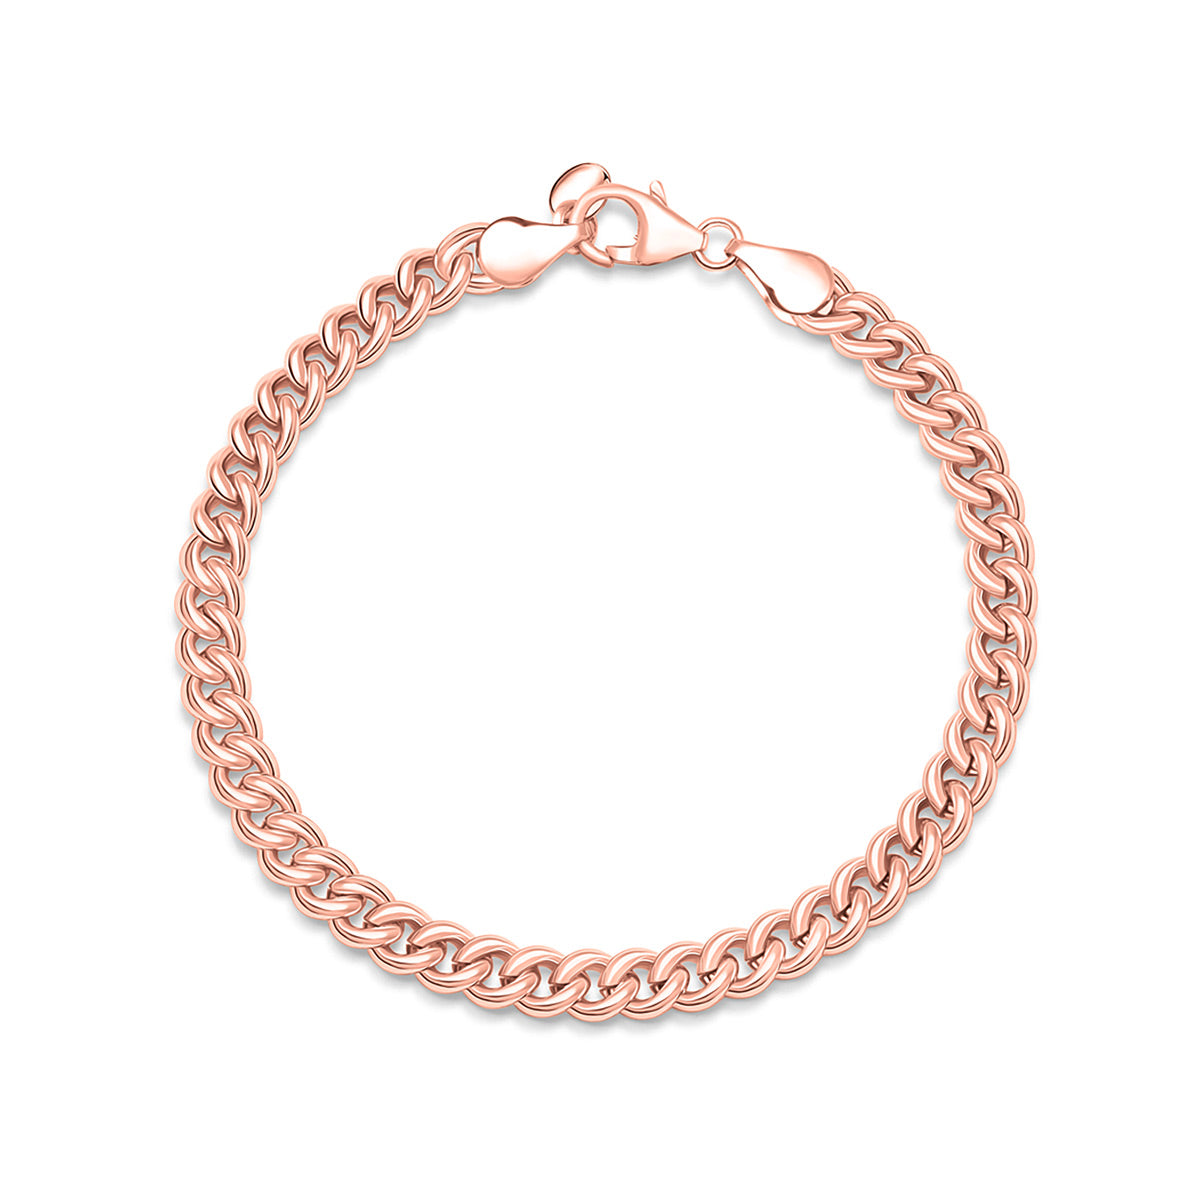 Rose gold thin chain bracelet